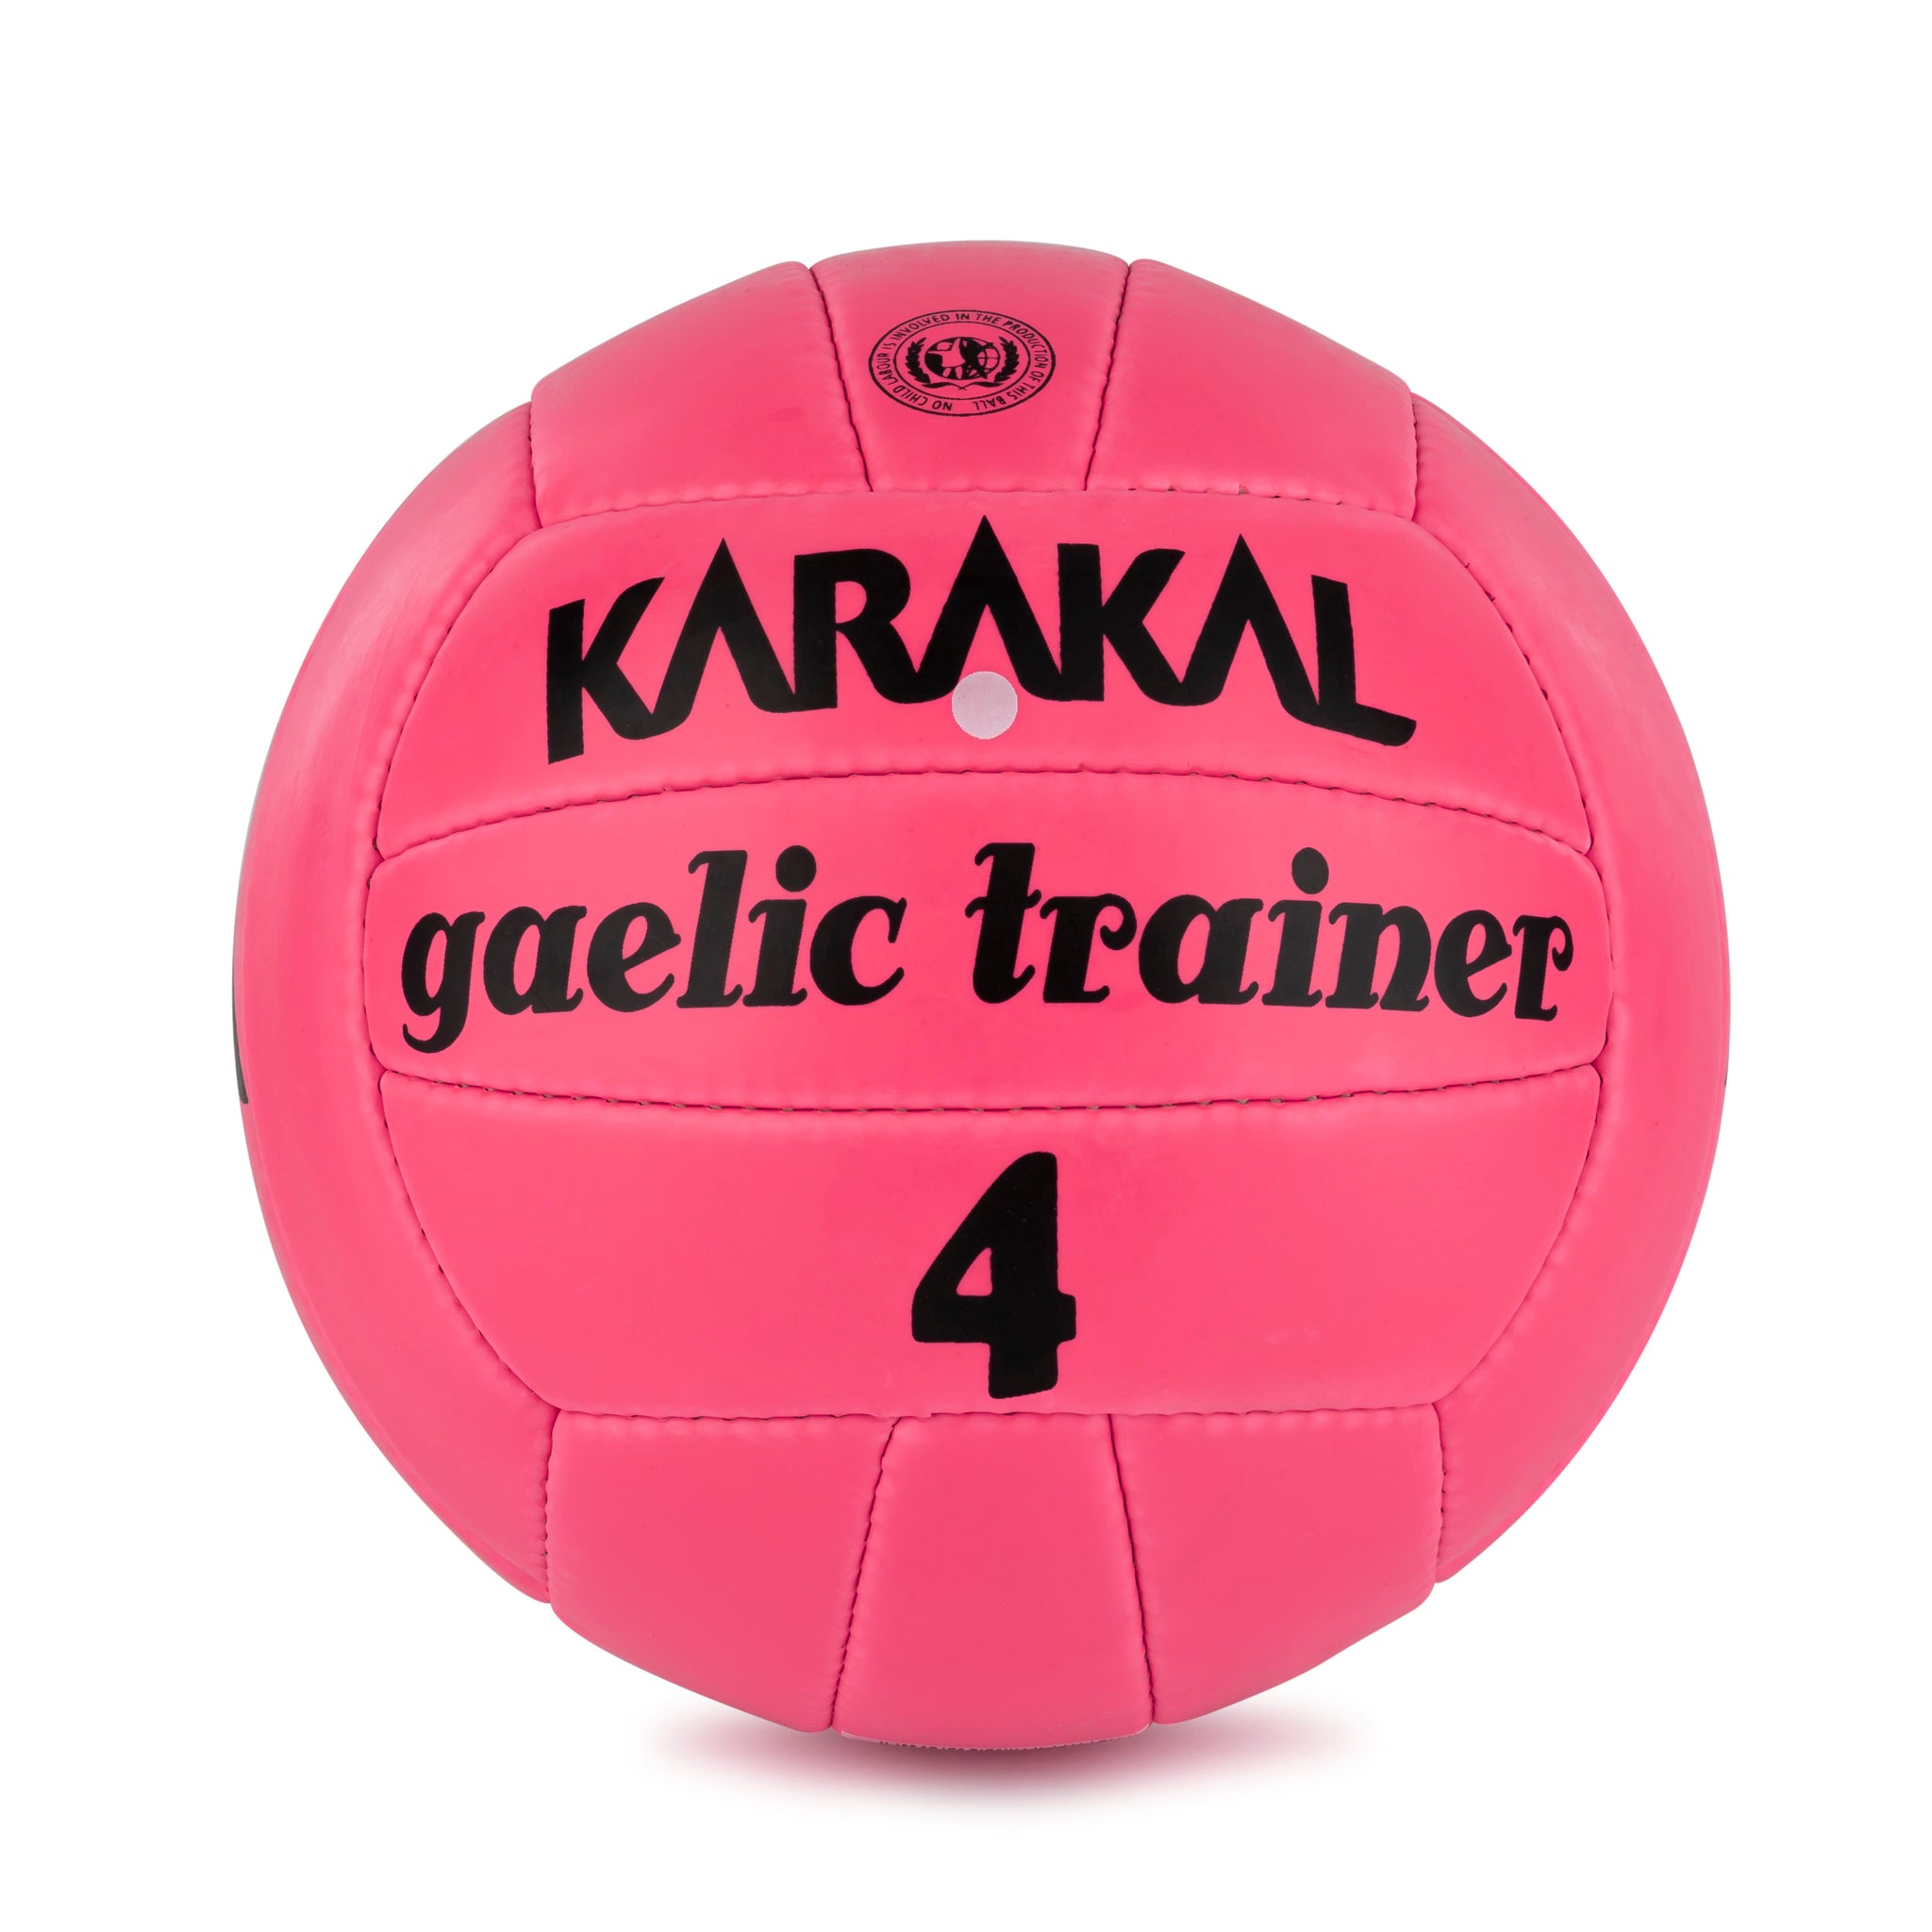 Karakal Gaelic Trainer Ball Size 4